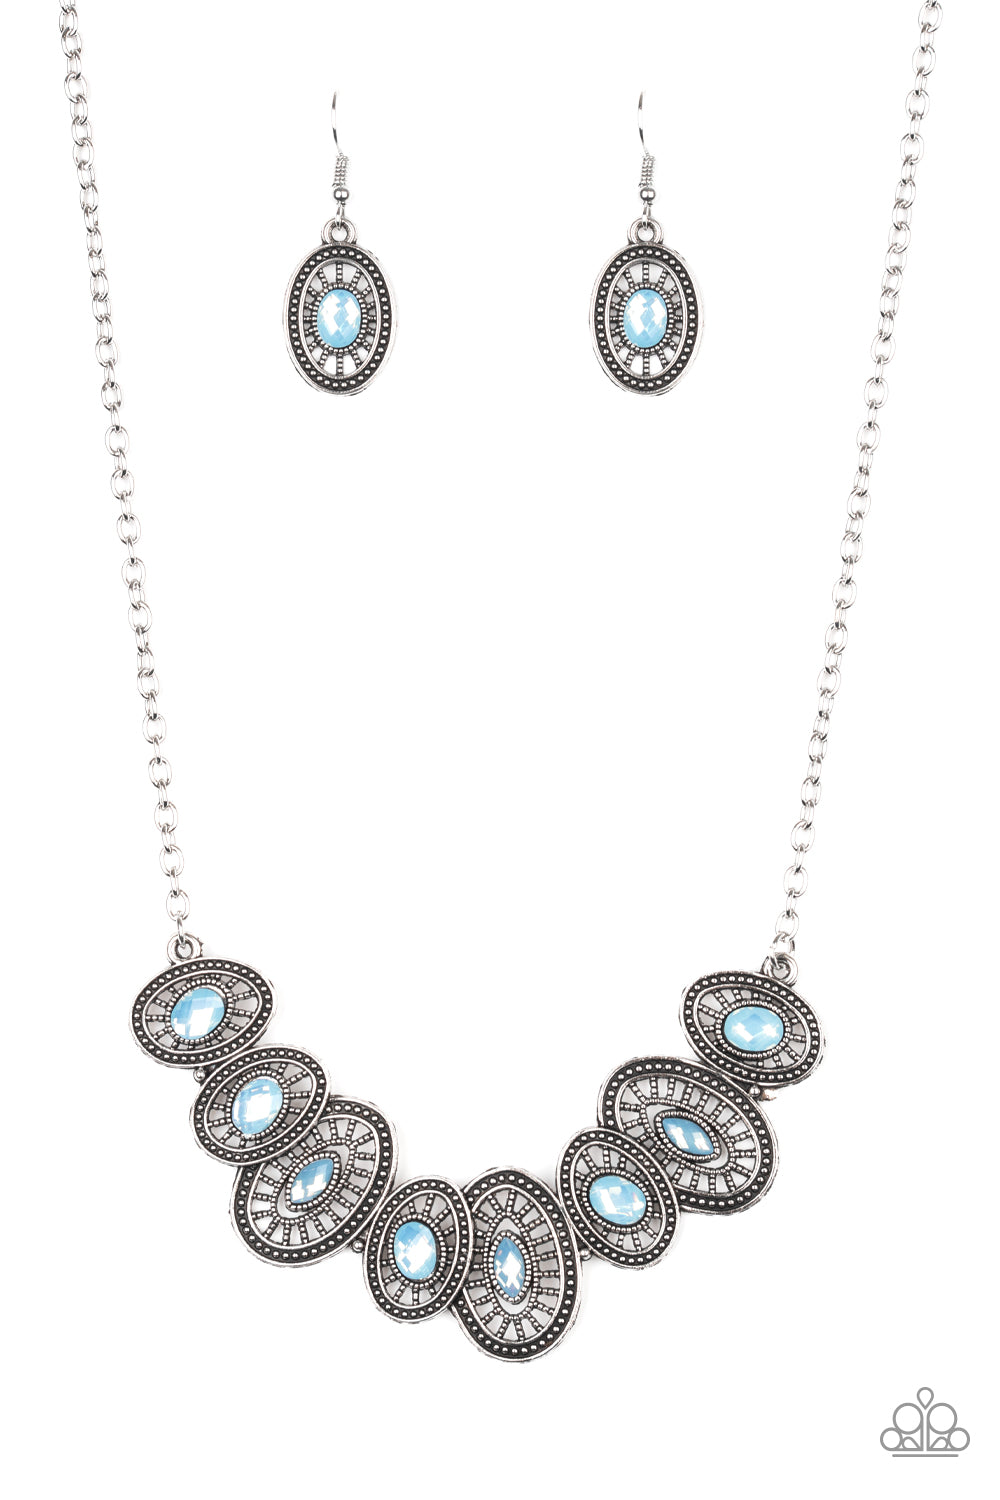 Trinket Trove - Blue necklace